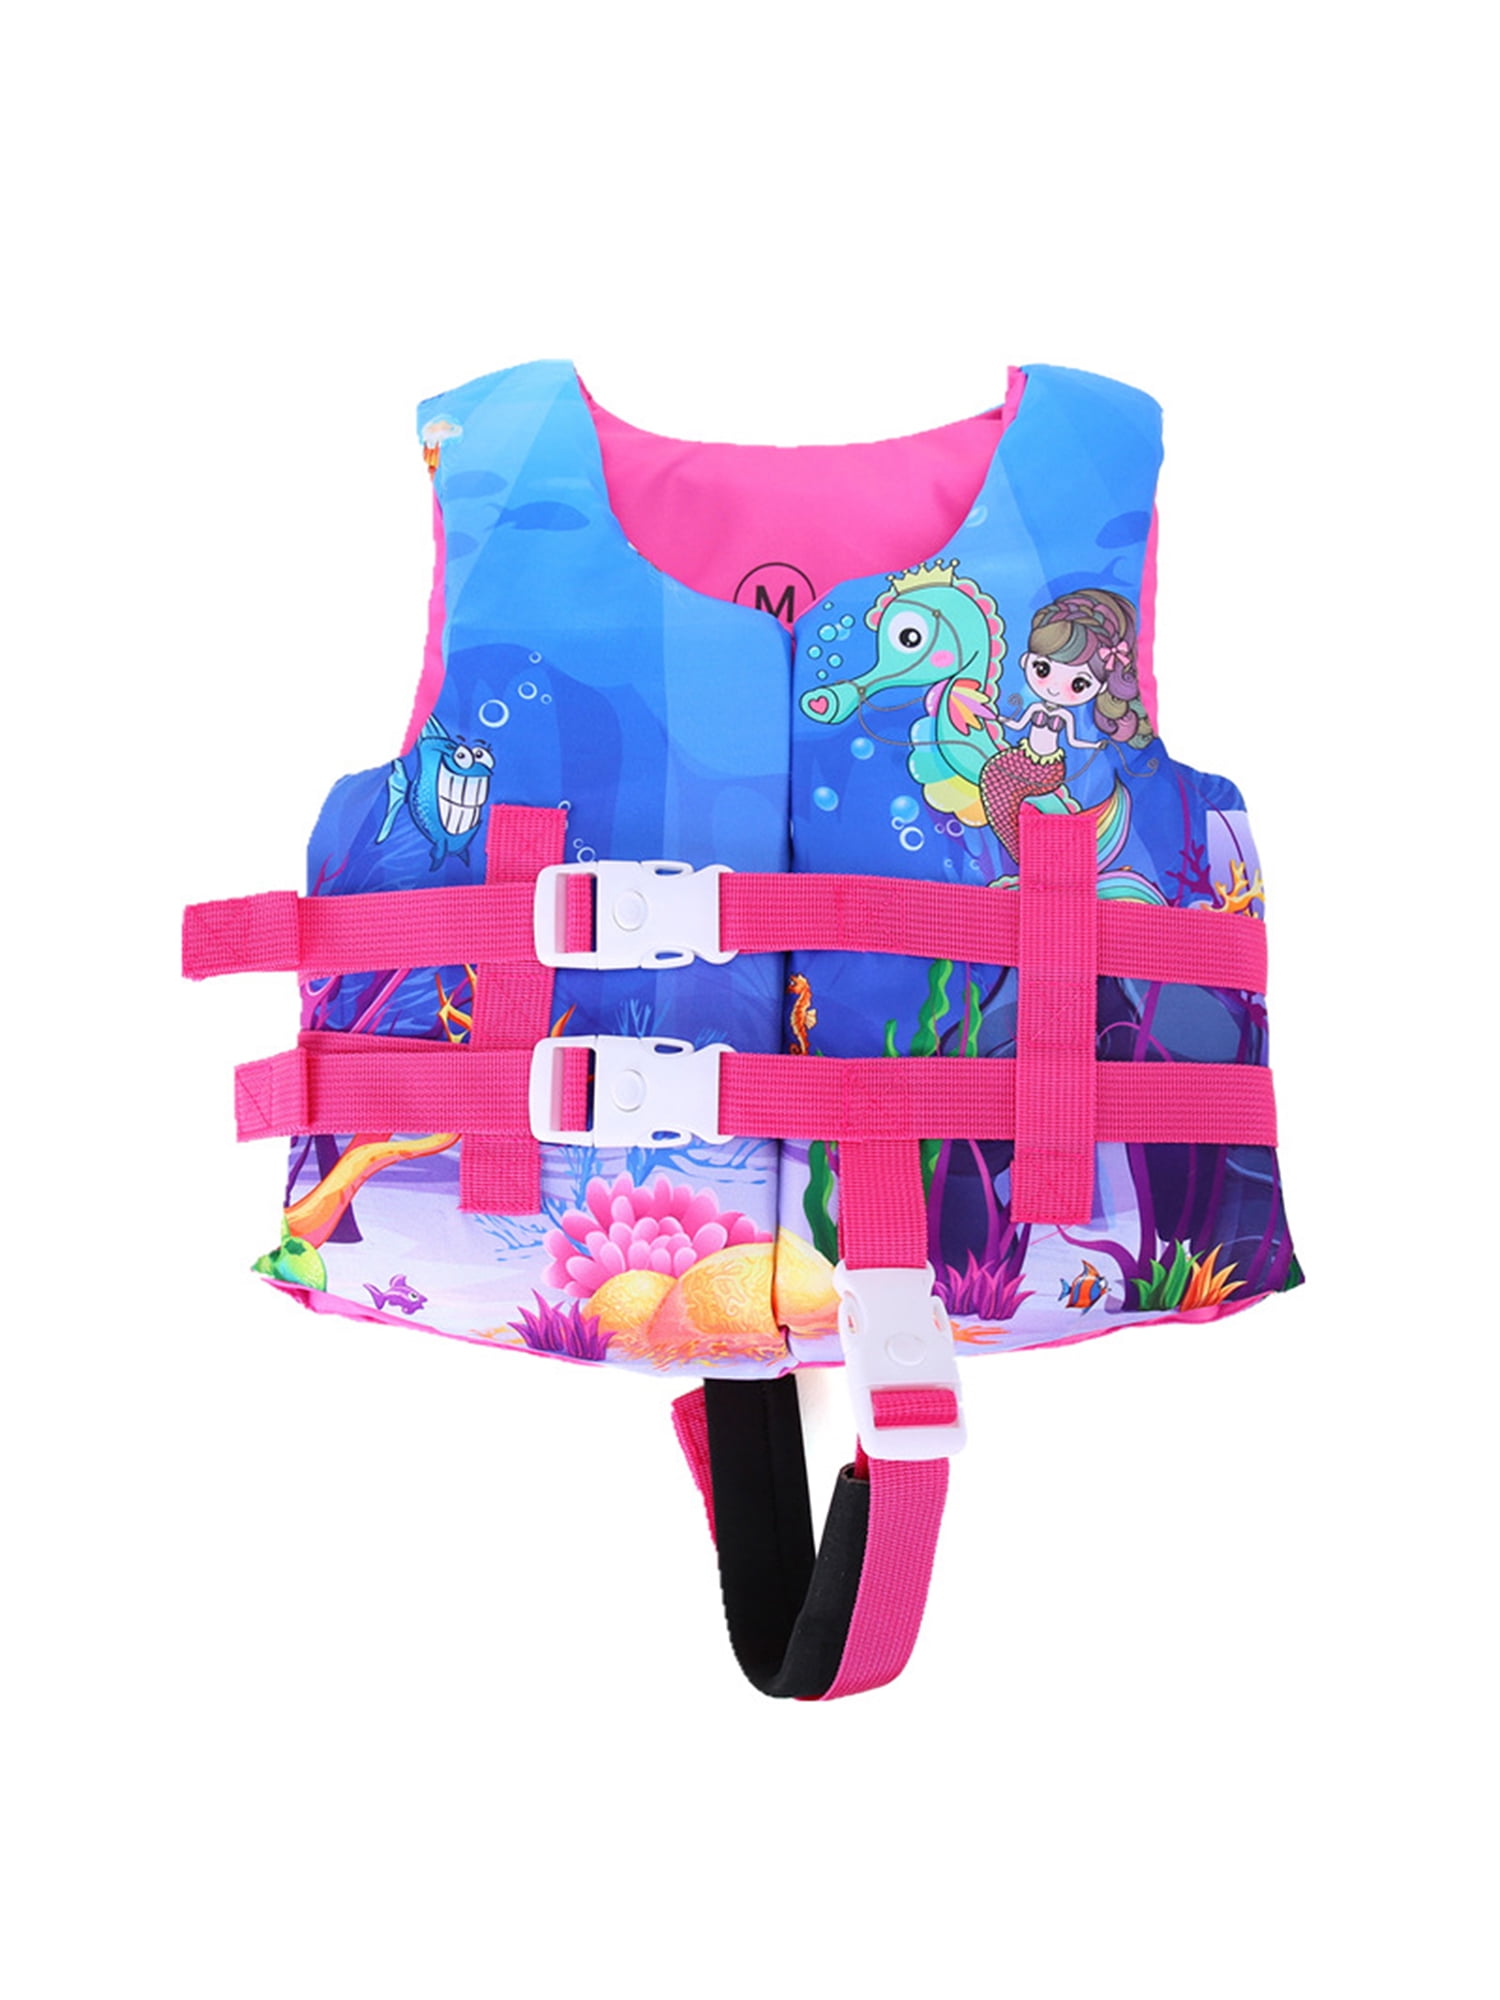 Details about   Swim Life Jacket  Floating Vest Child Kids Aid Buoyancy Swimming Safety Suit 